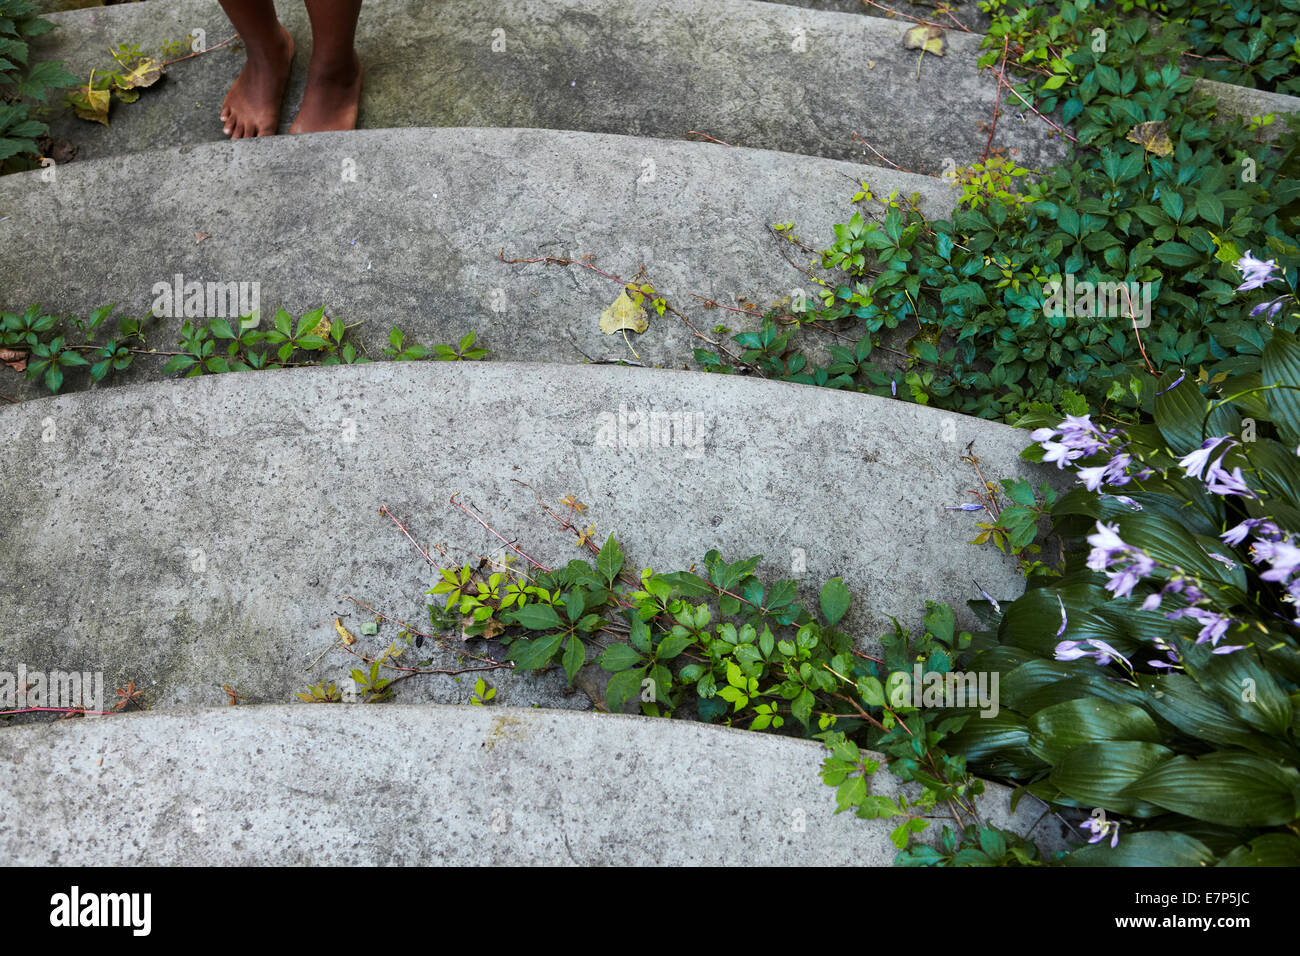 Bare feet of black child at bottom of steps Stock Photo